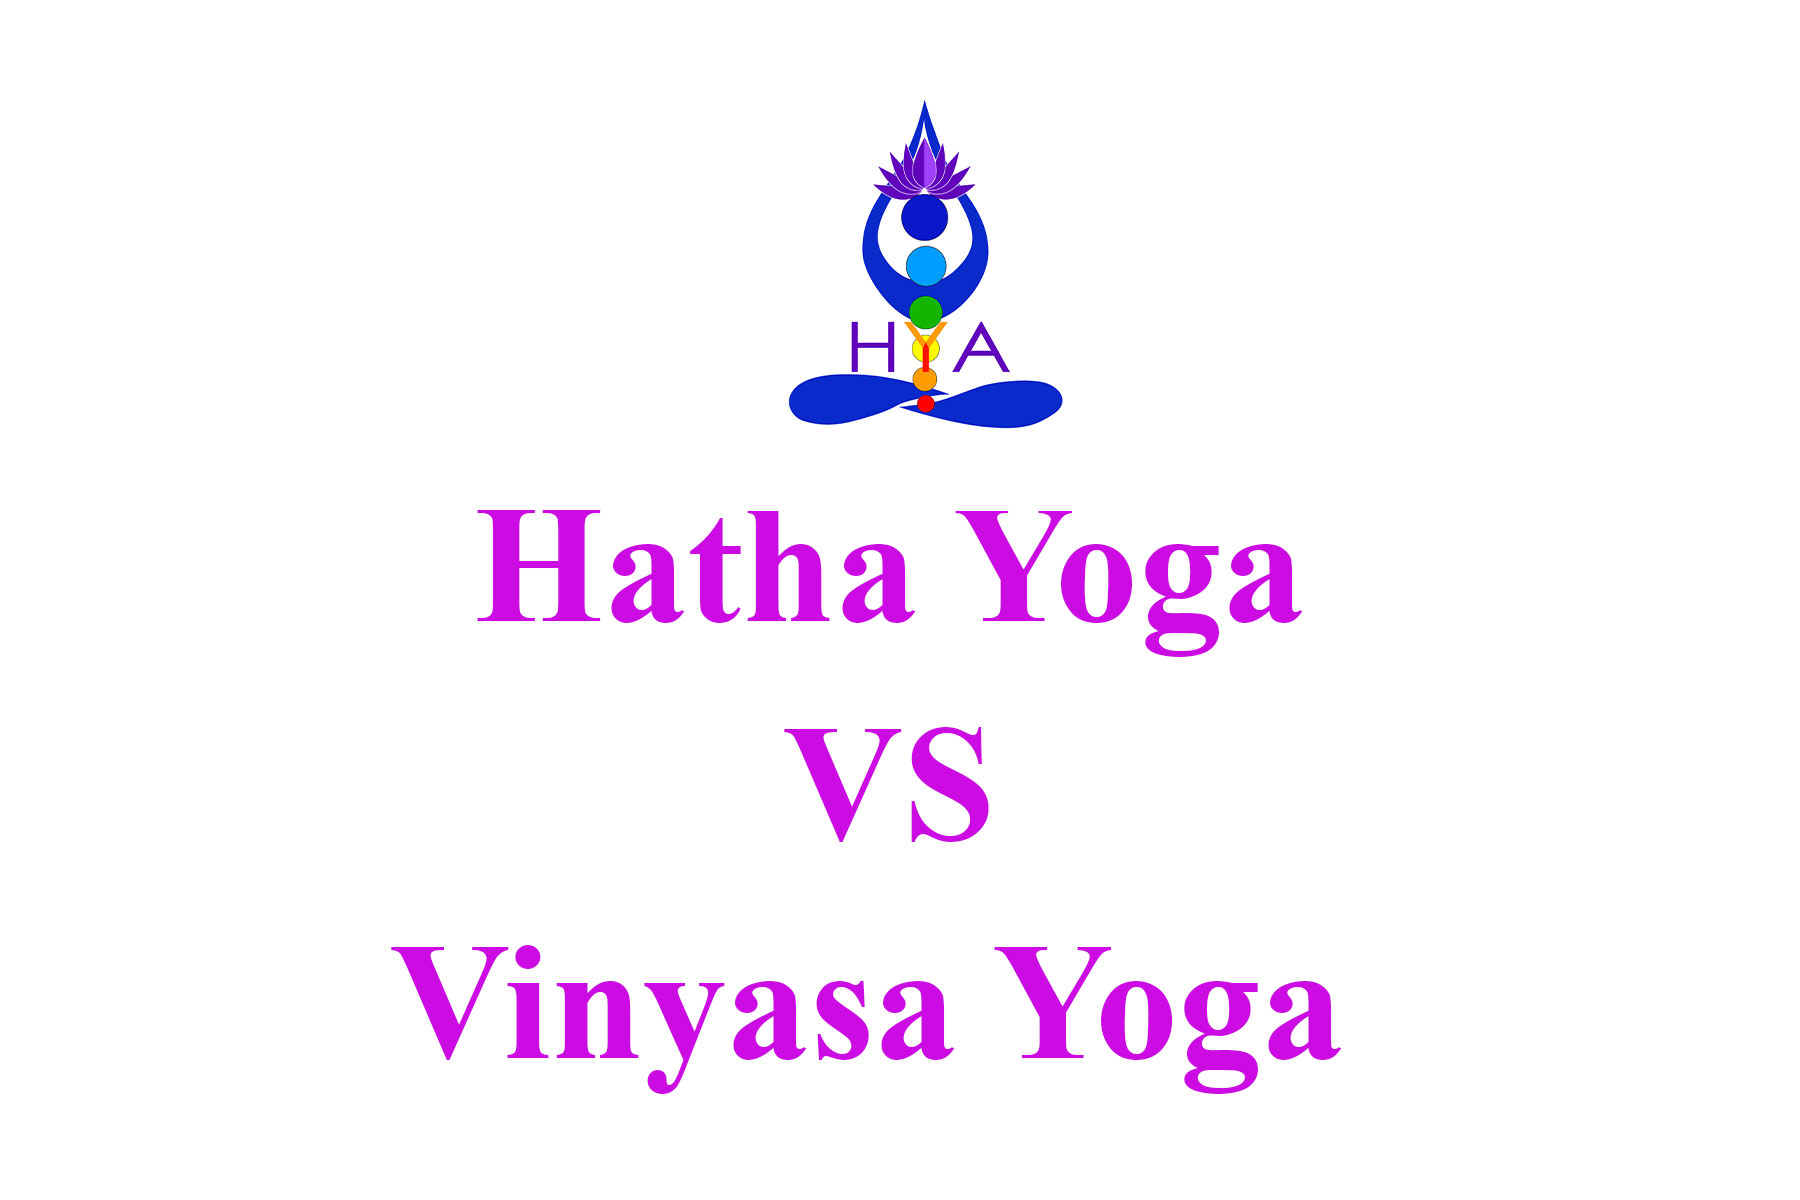 hatha yoga and vinyasa yoga